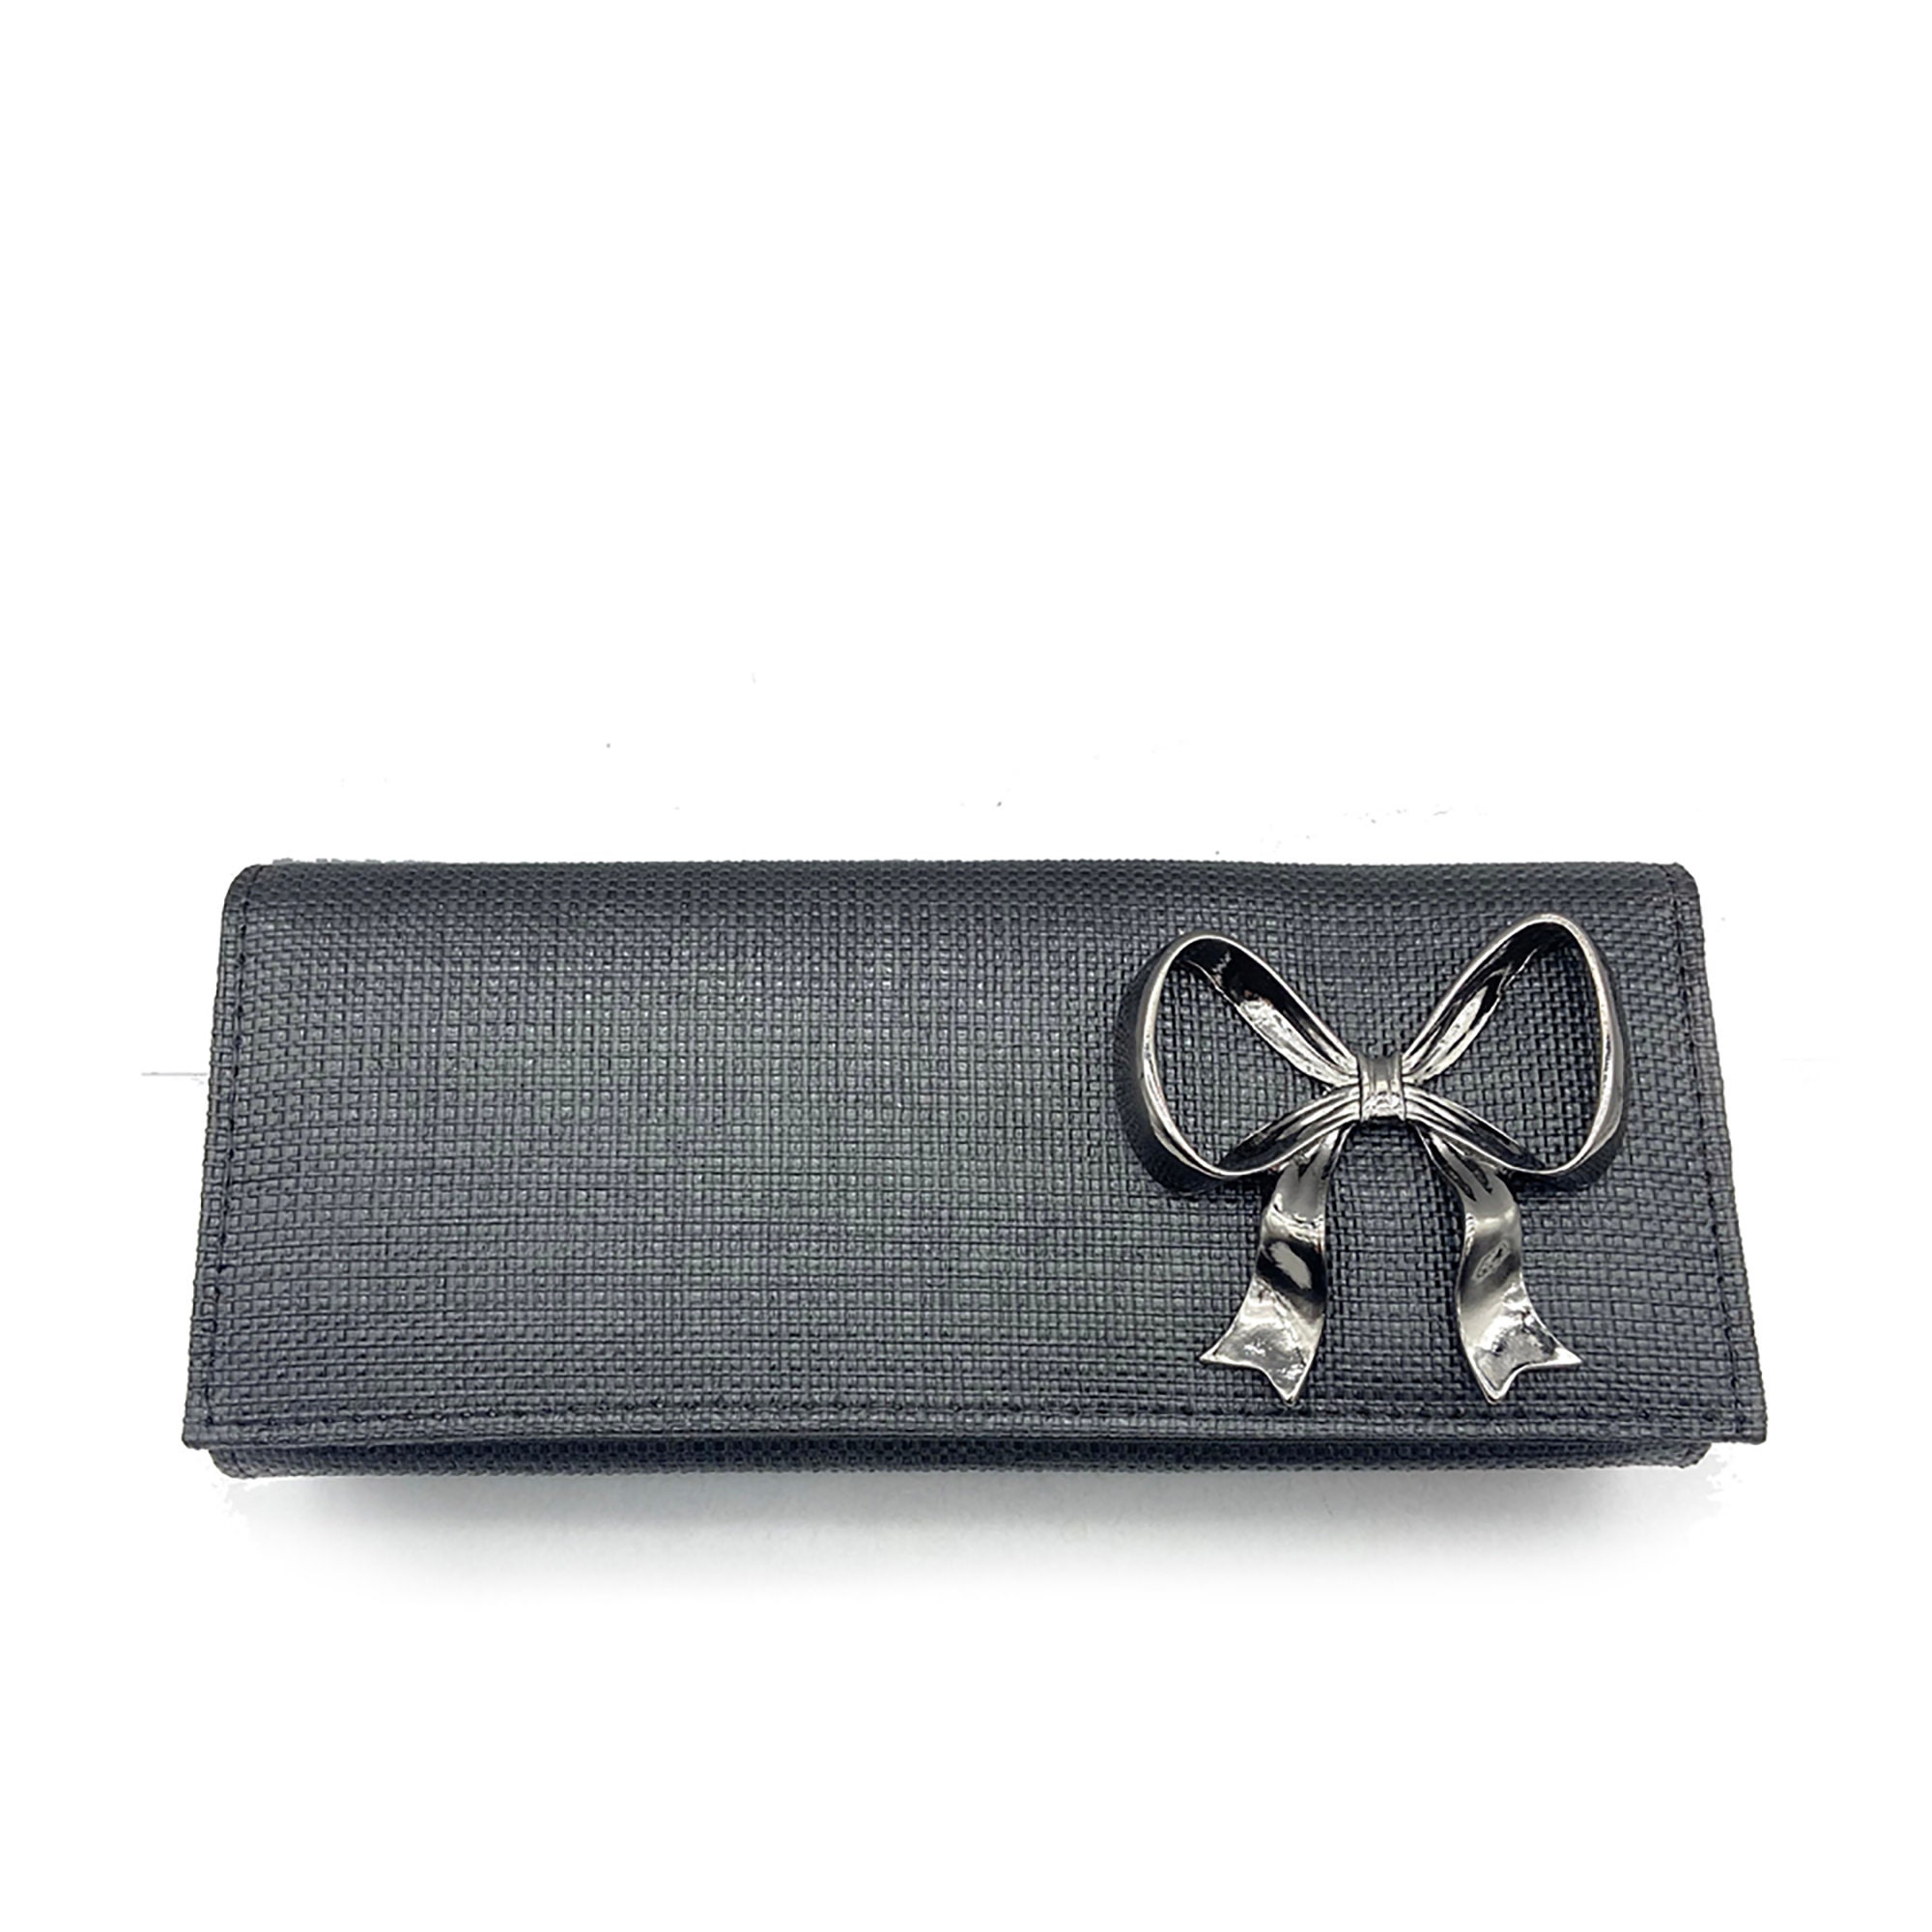 Black Broadway crystal-embellished bow satin clutch bag | Gucci | MATCHES UK